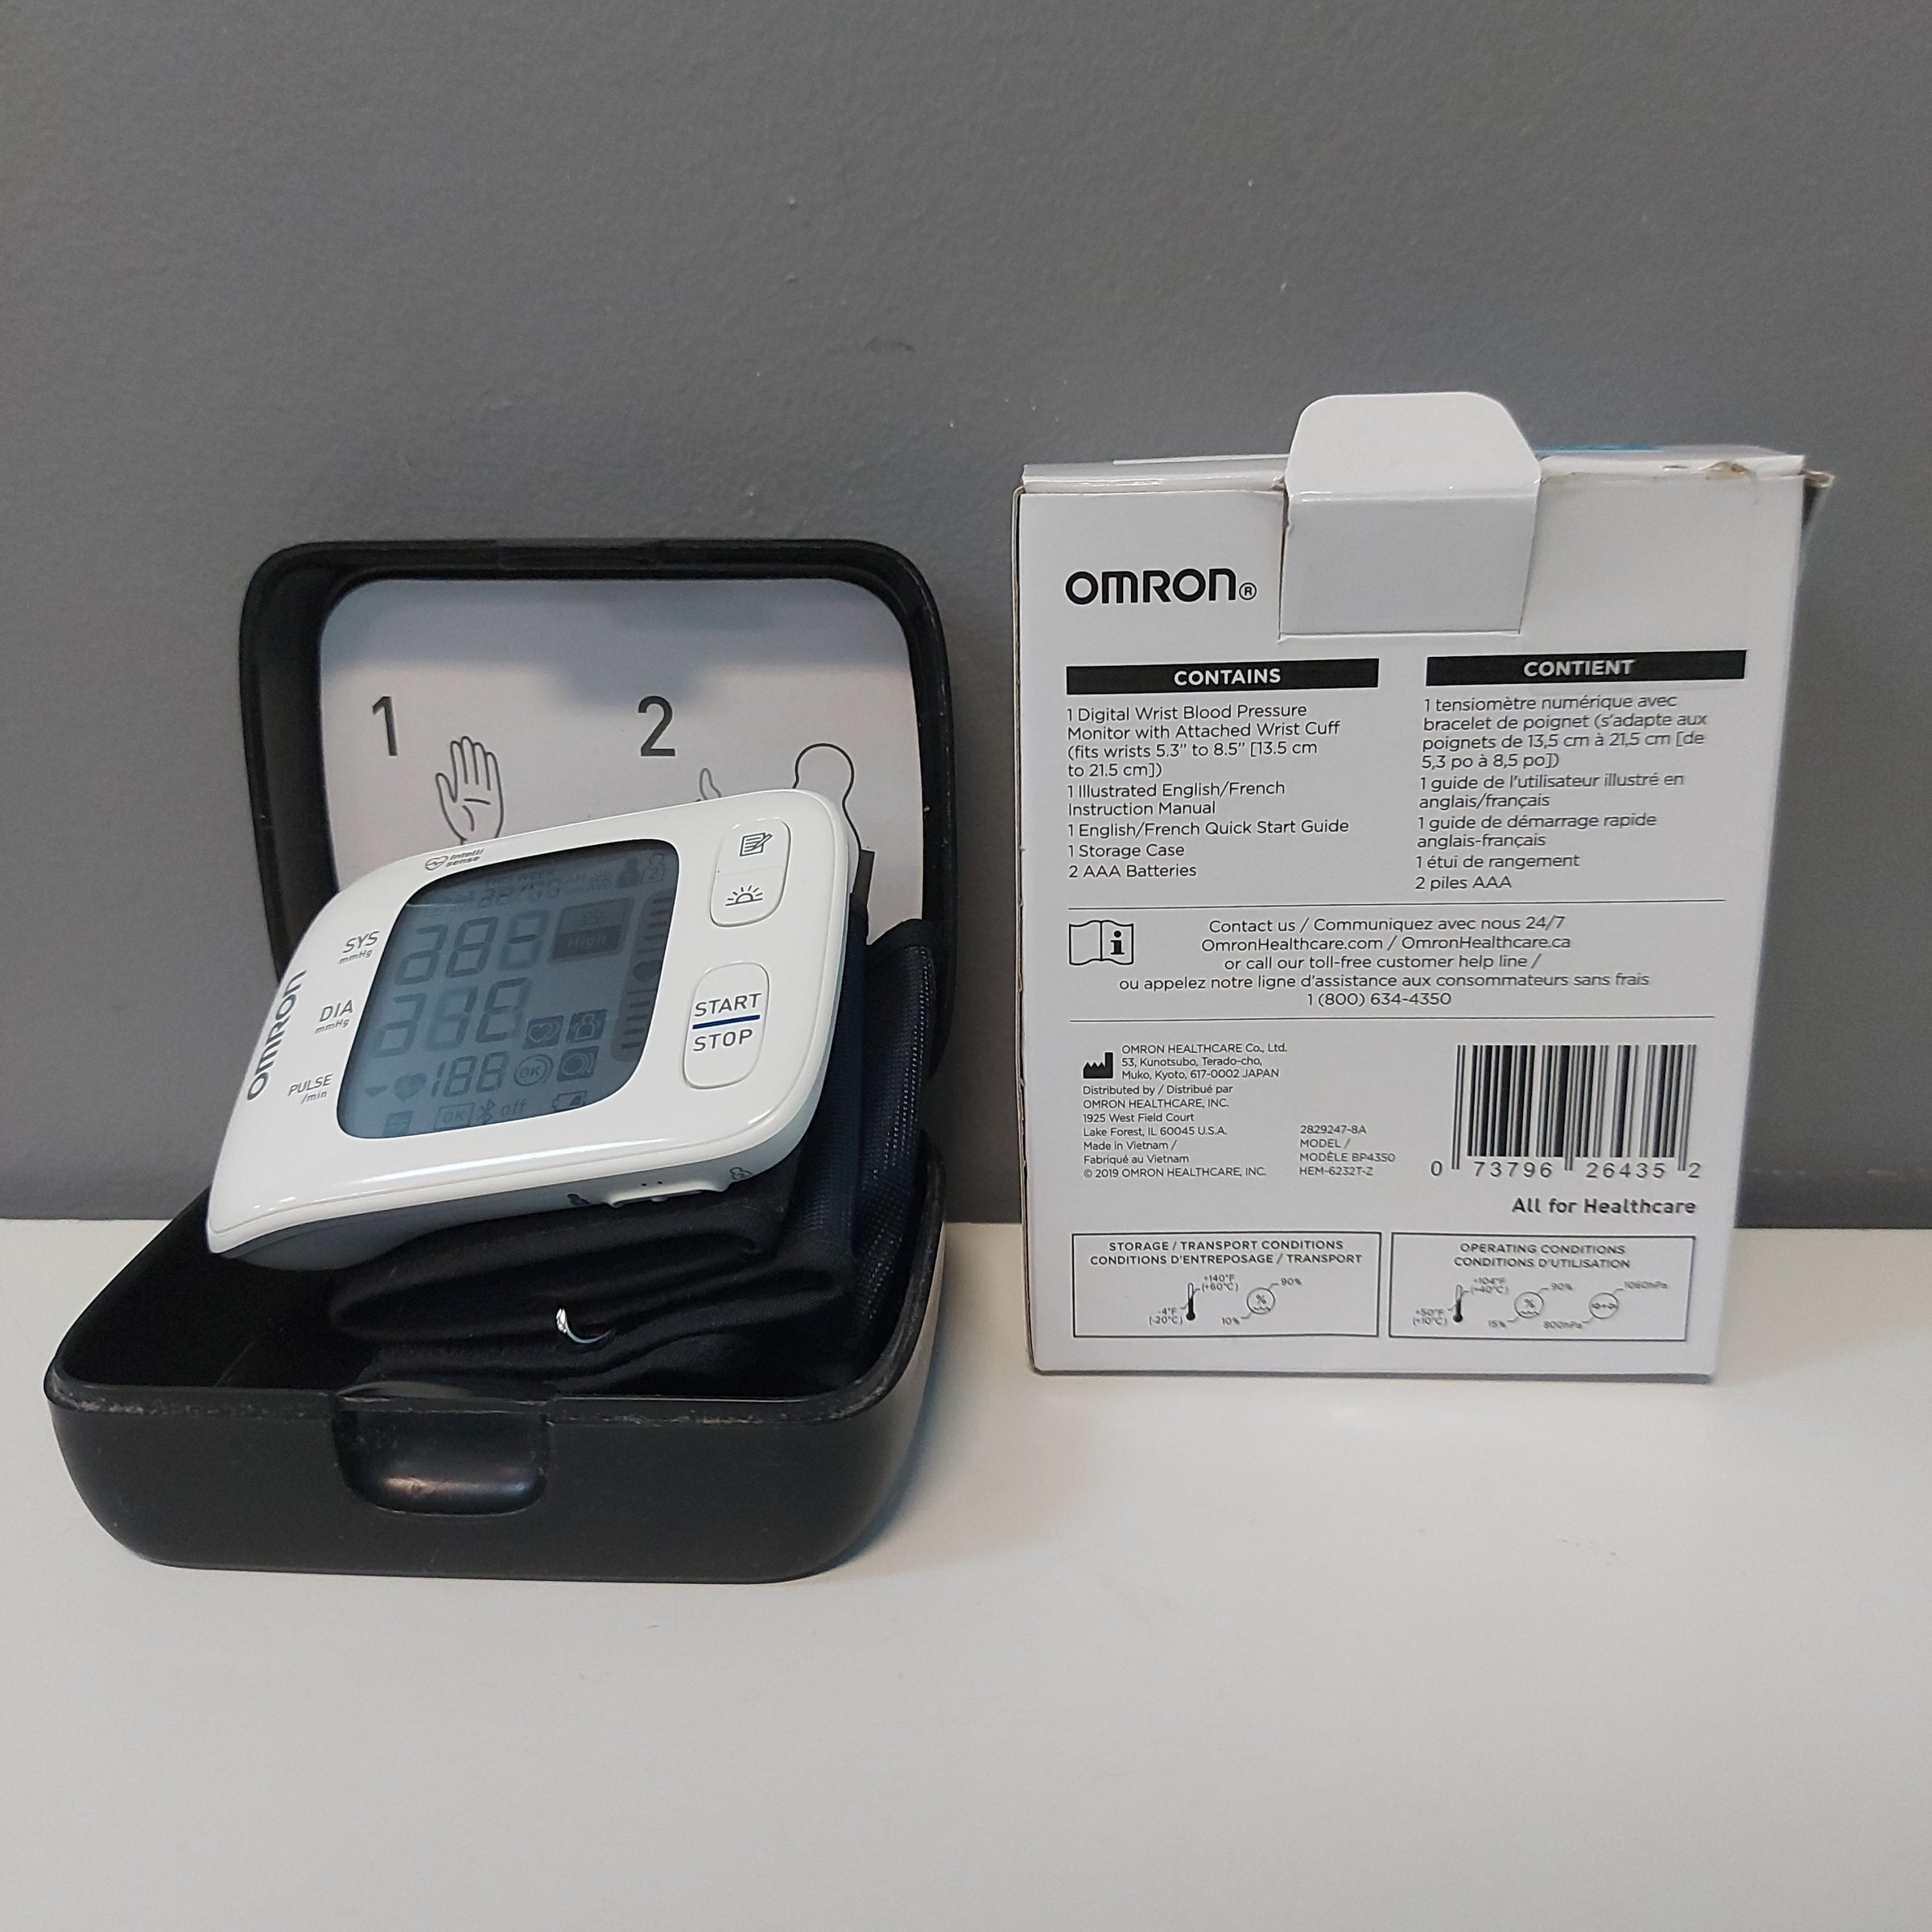 OMRON BP4350 Gold Blood Pressure Monitor Instruction Manual